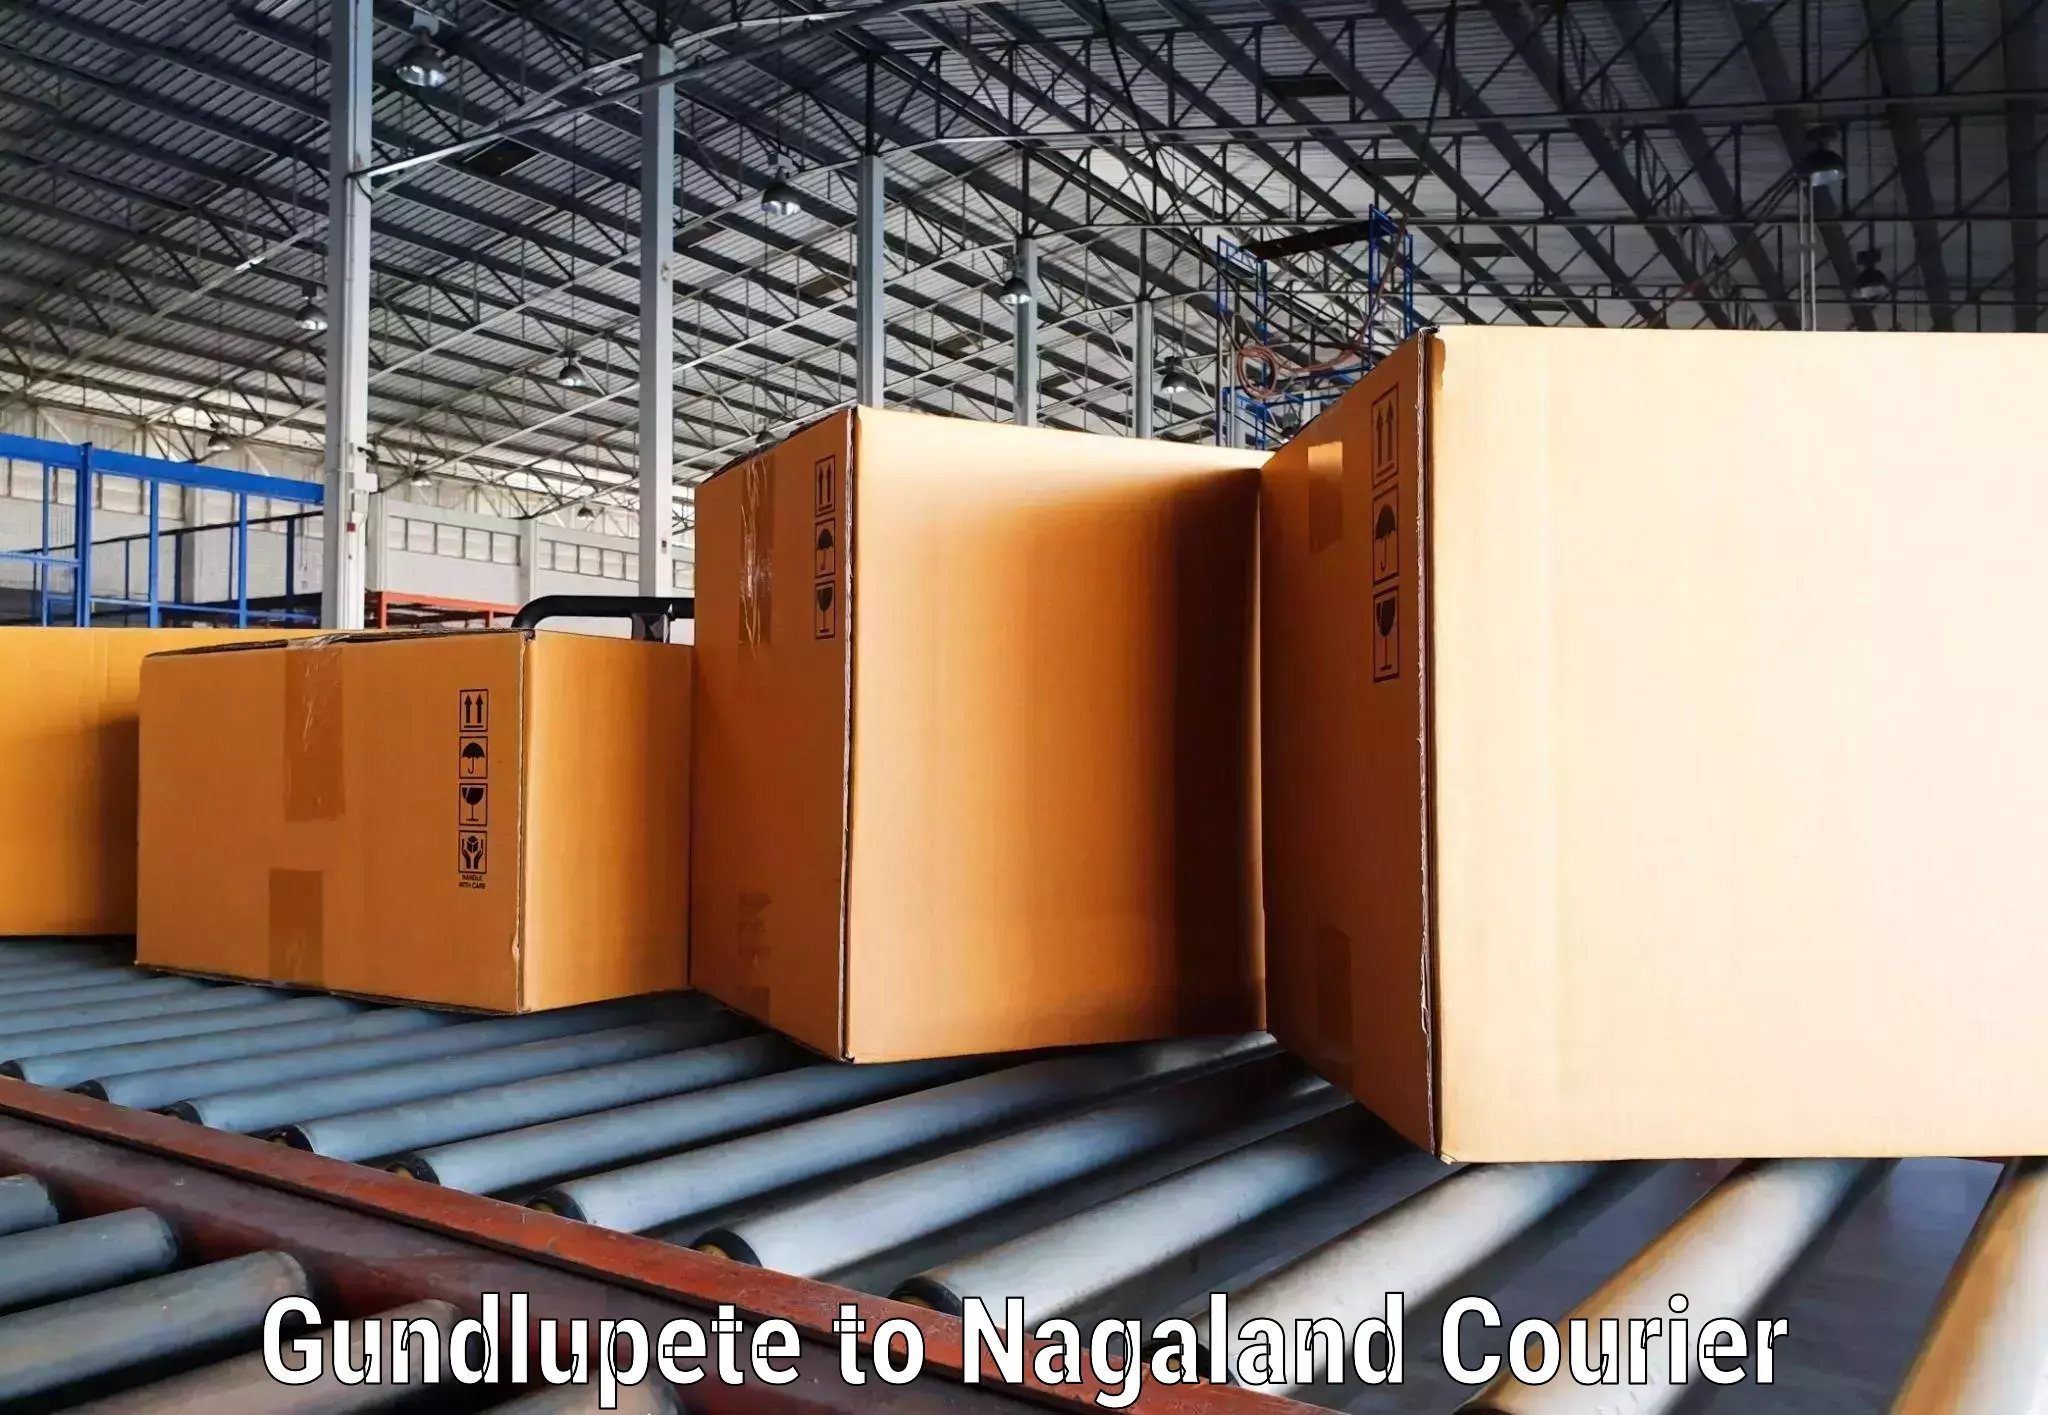 Digital courier platforms Gundlupete to Nagaland